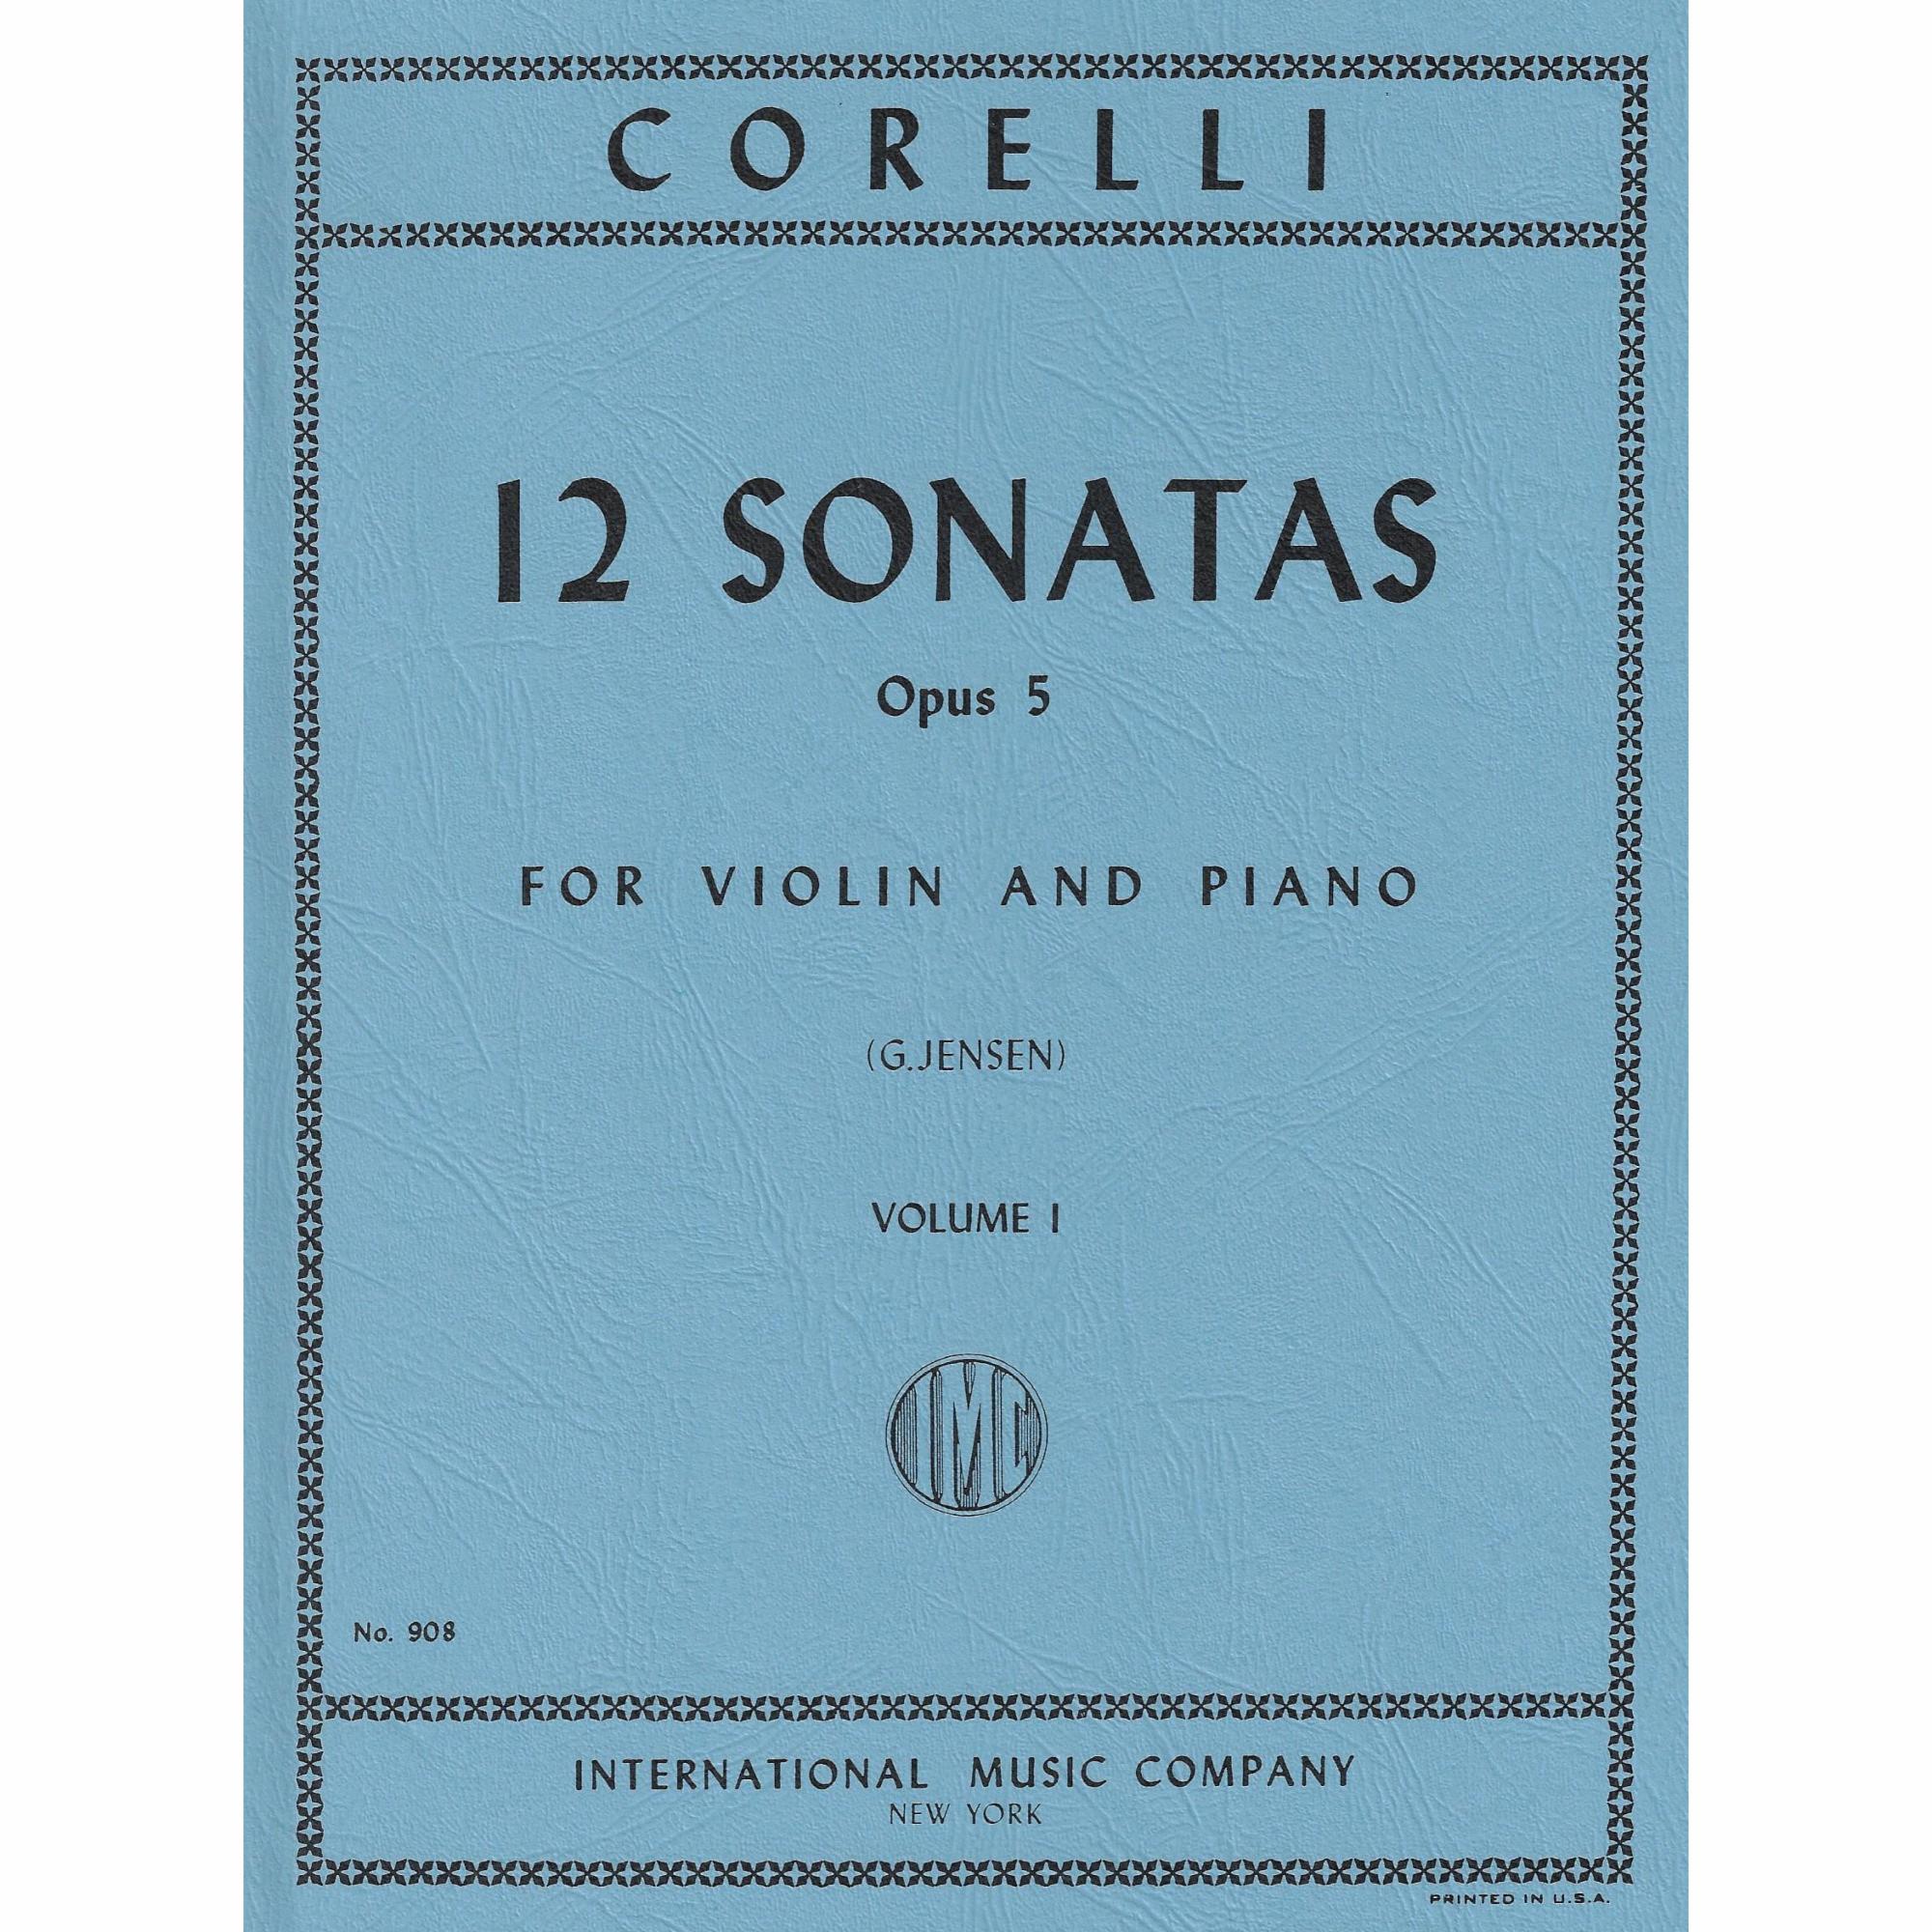 Corelli -- Twelve Sonatas, Op. 5, Volumes I-II for Violin and Piano